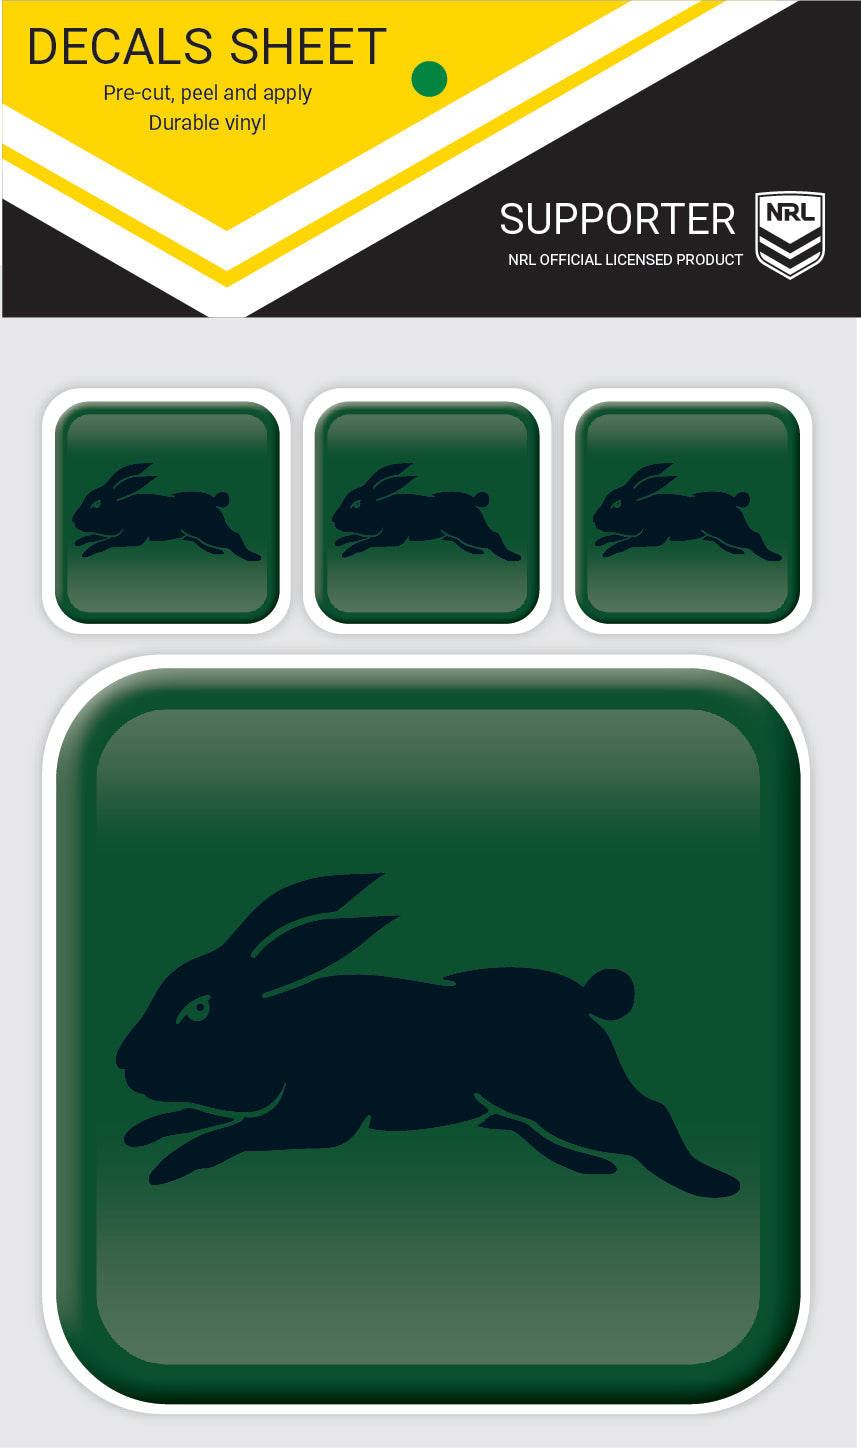 Rabbitohs App Icon Decals Sheet